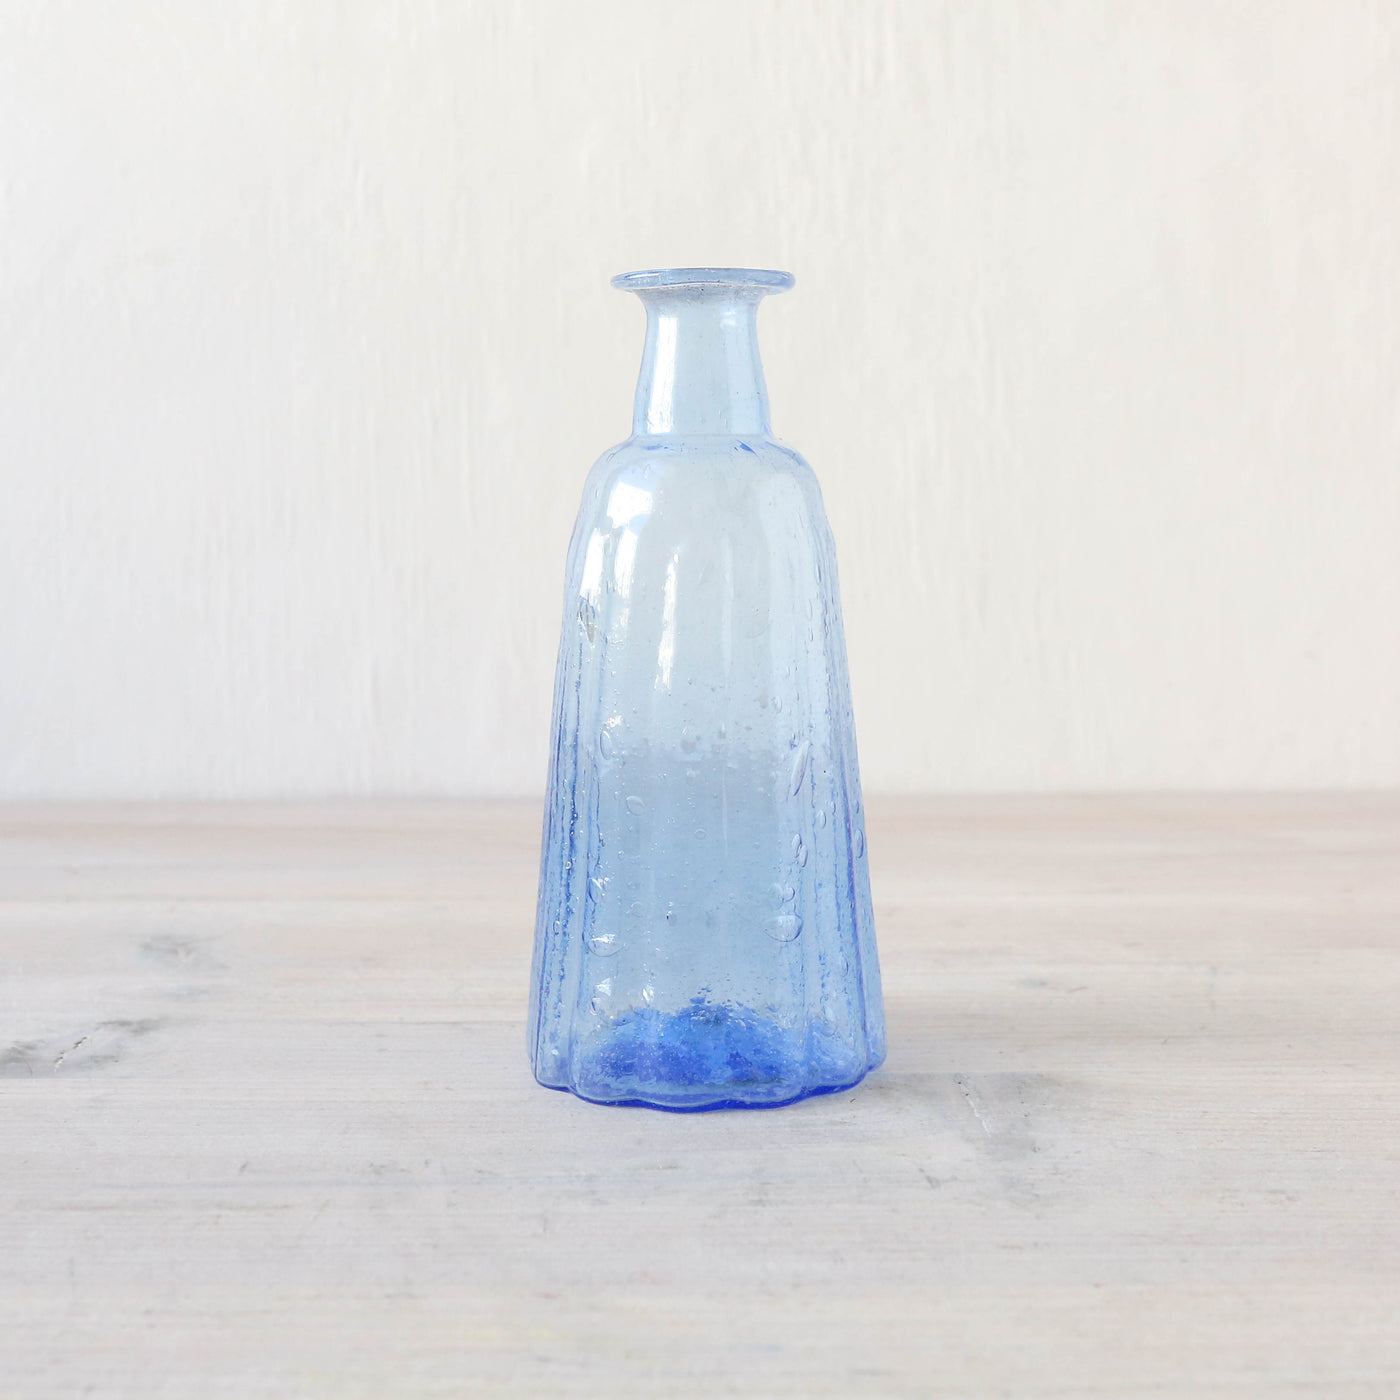 13cm Recycled Glass Shaped Vase - Lapis